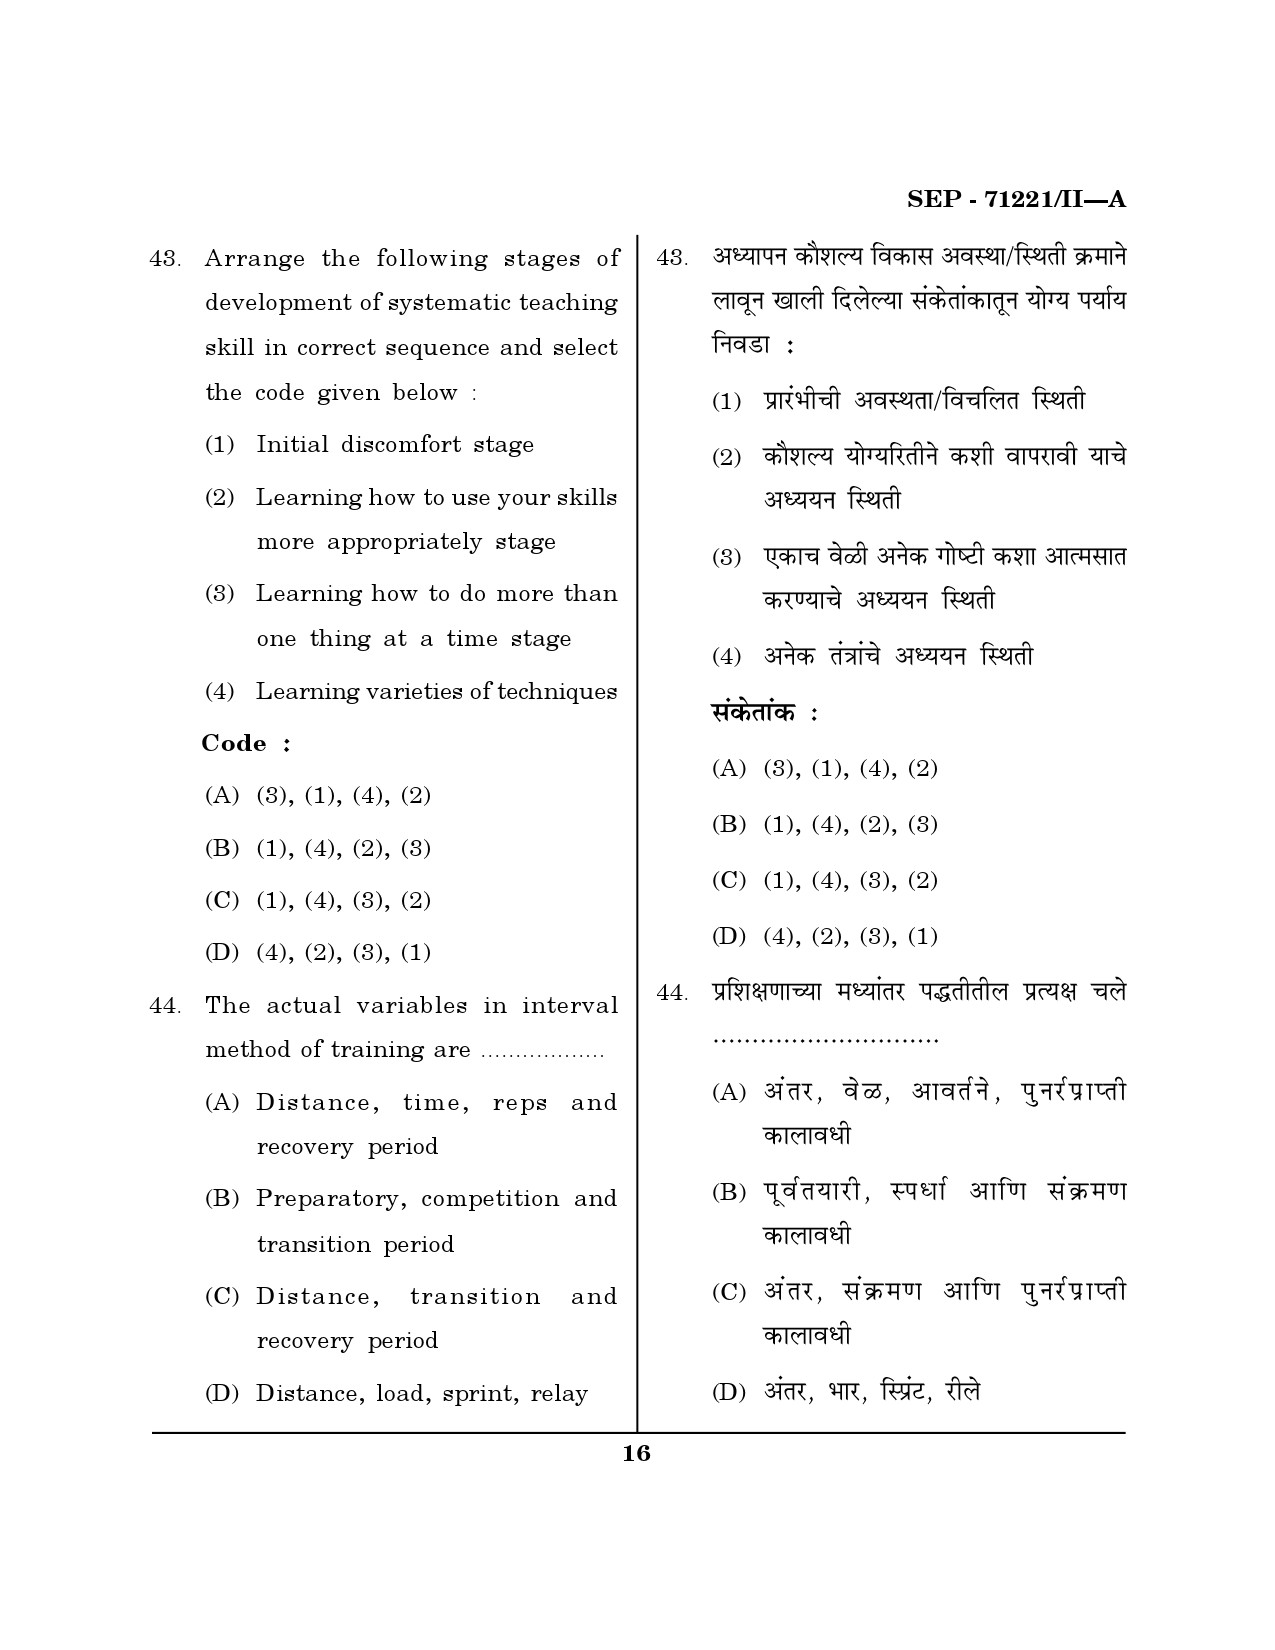 Maharashtra SET Physical Education Exam Question Paper September 2021 15